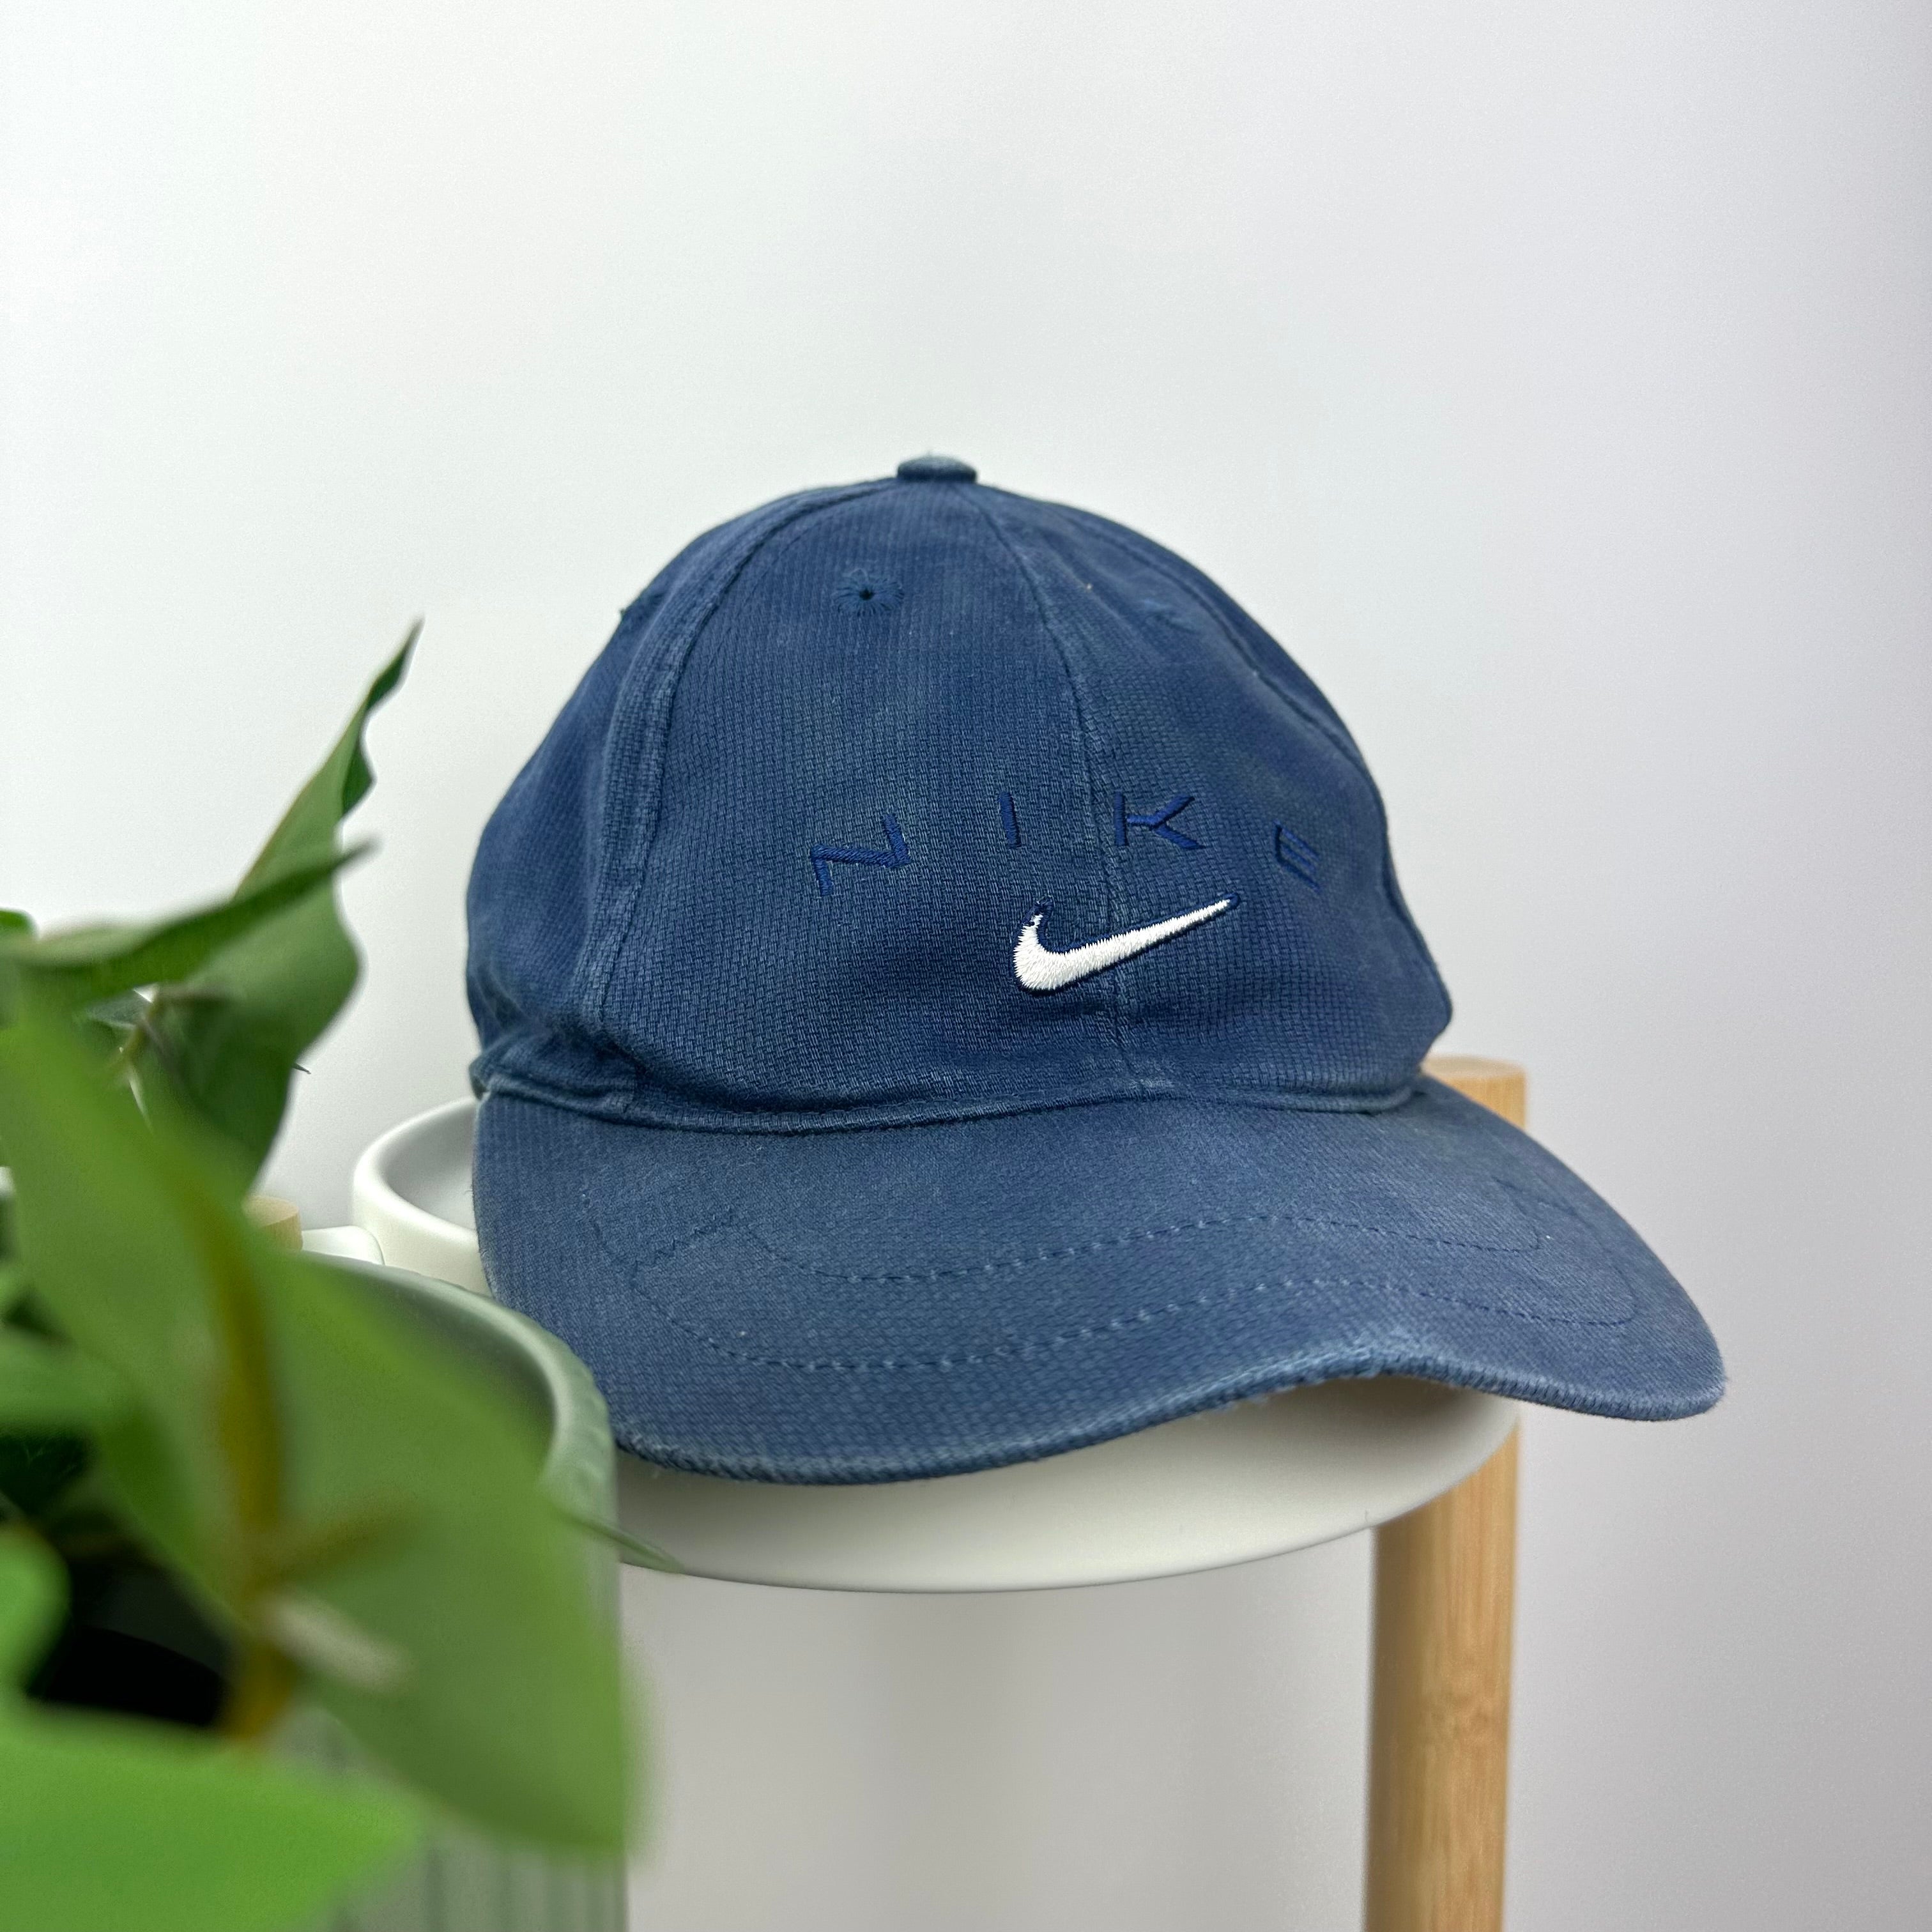 Nike Navy Cap